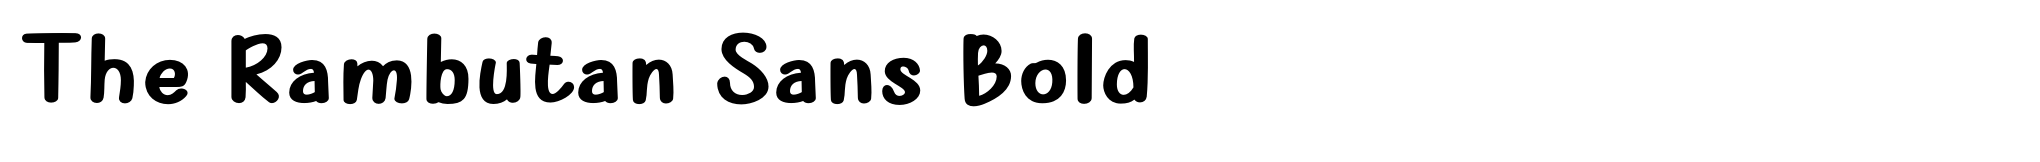 The Rambutan Sans Bold image